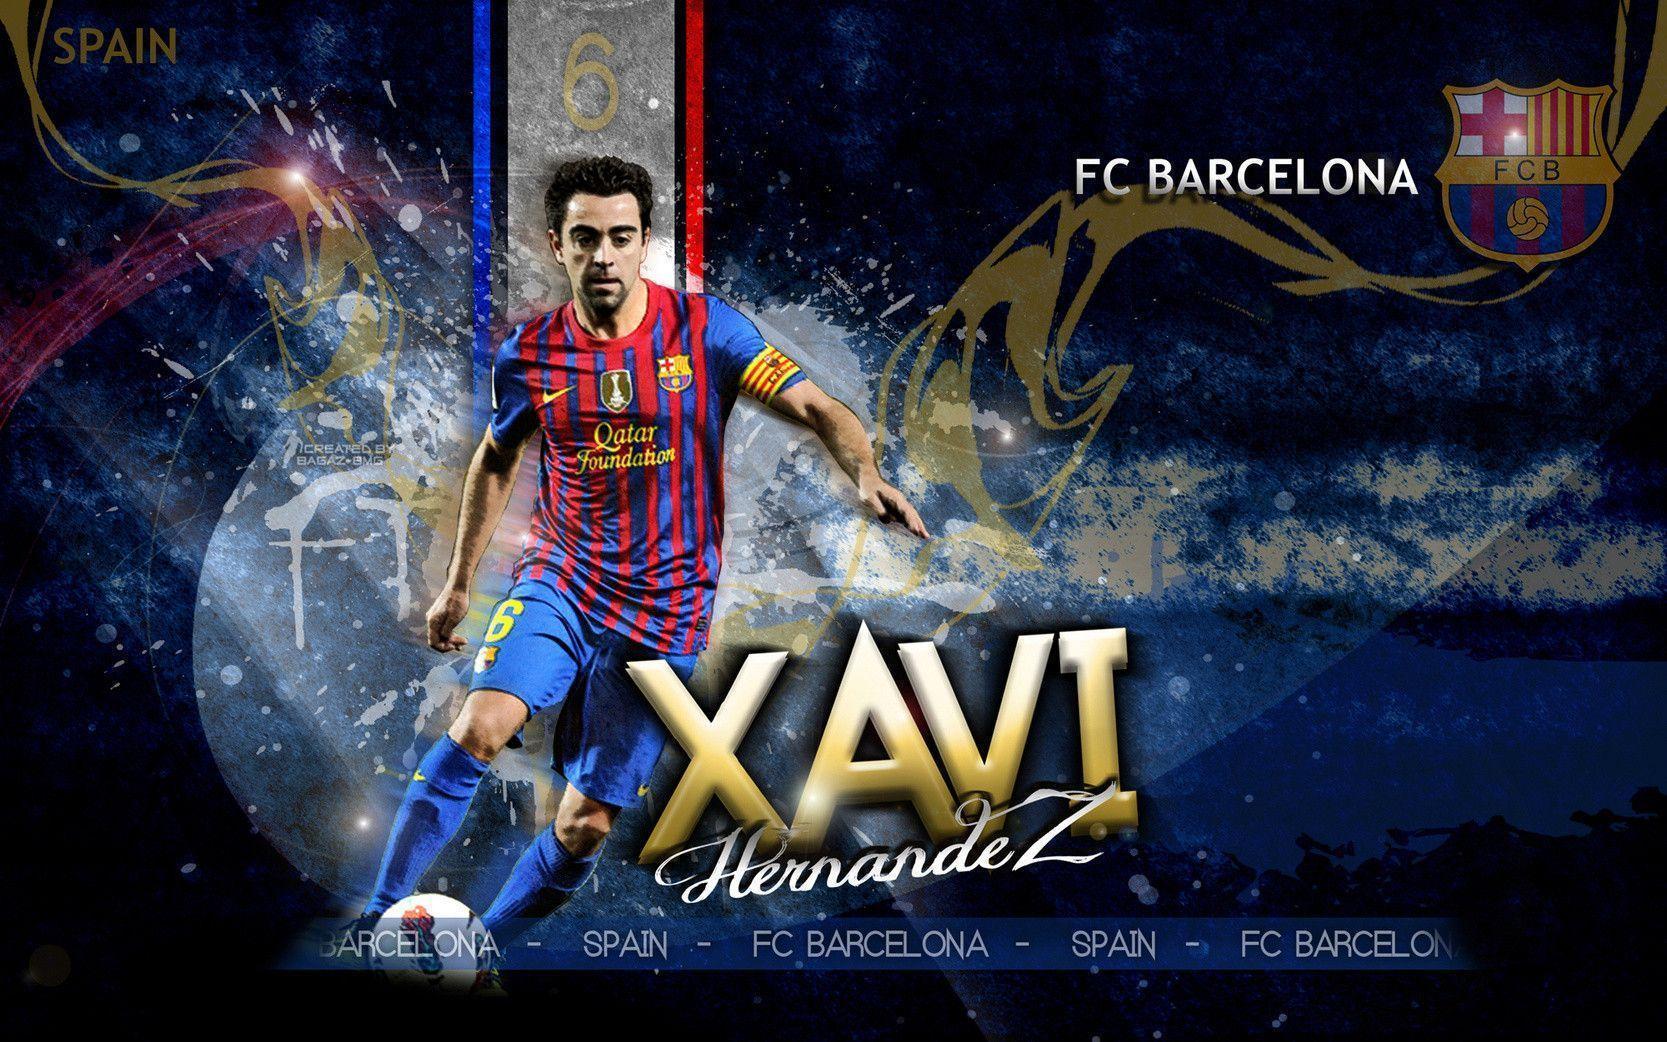 Xavi Hernandez Fc Barcelona Midfielder HD Wallpaper 1600x1280PX